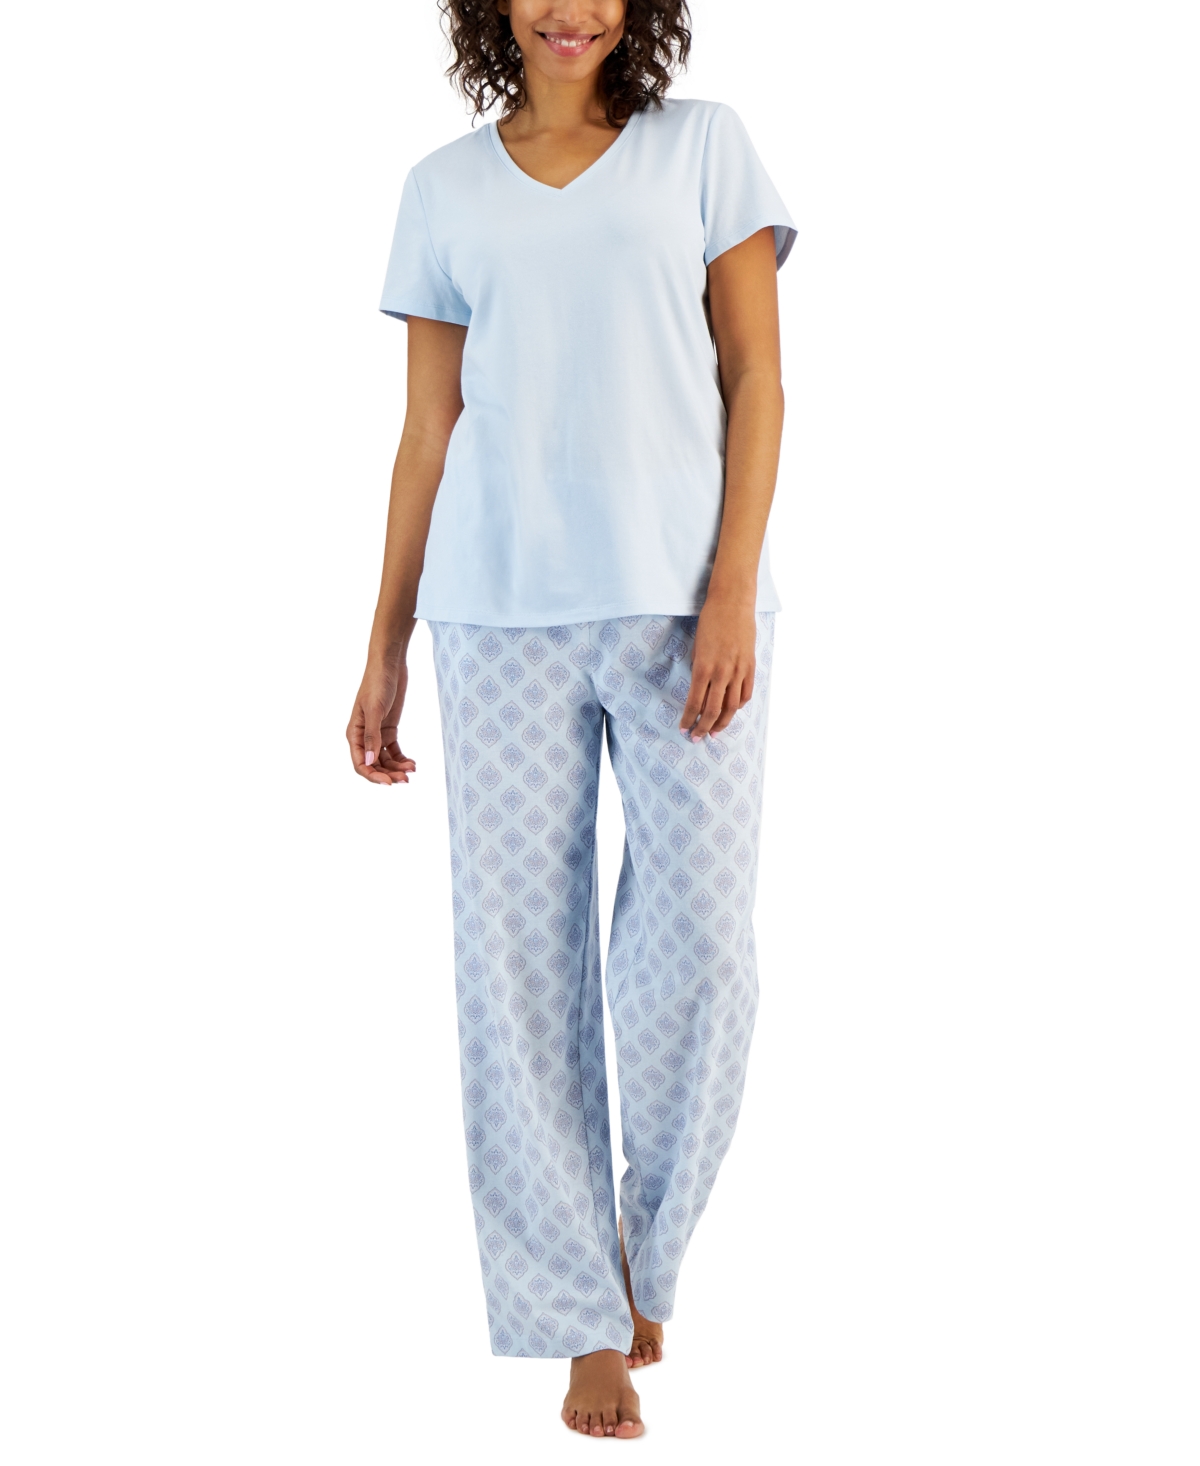 CHARTER CLUB Pajamas for Women